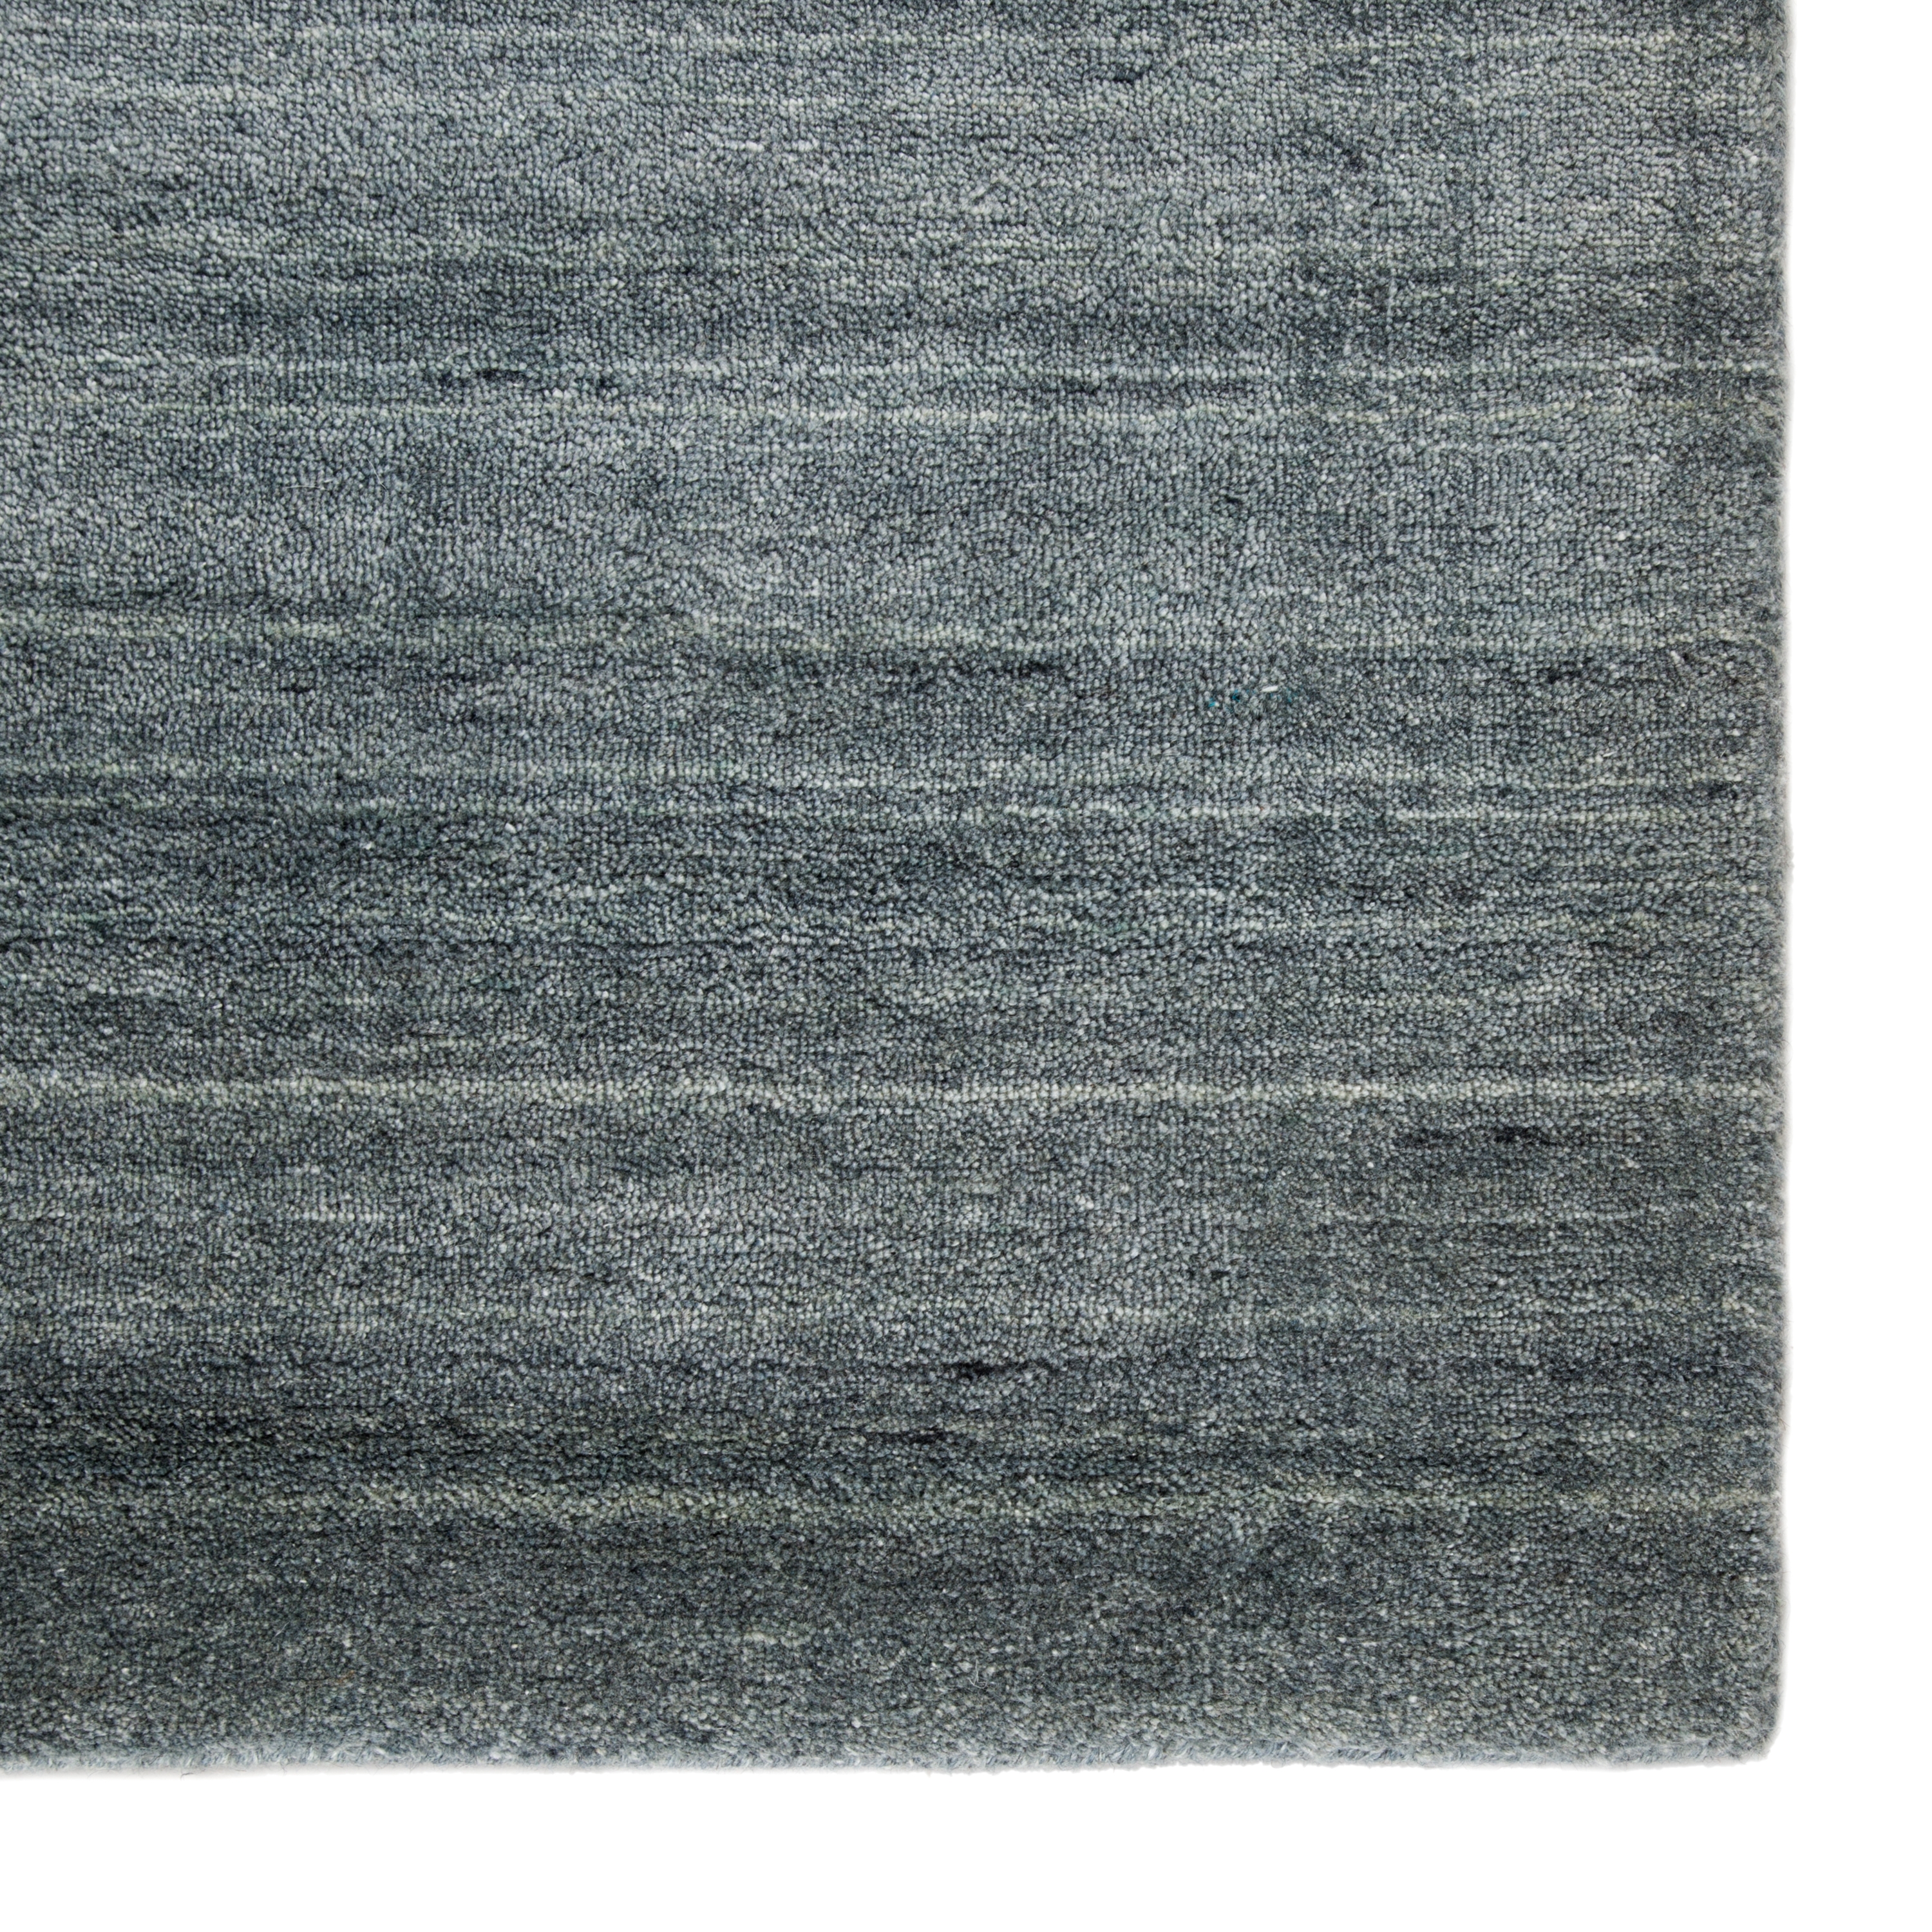 Bellweather Handmade Solid Gray/ Light Blue Area Rug (5'X8') - Image 3